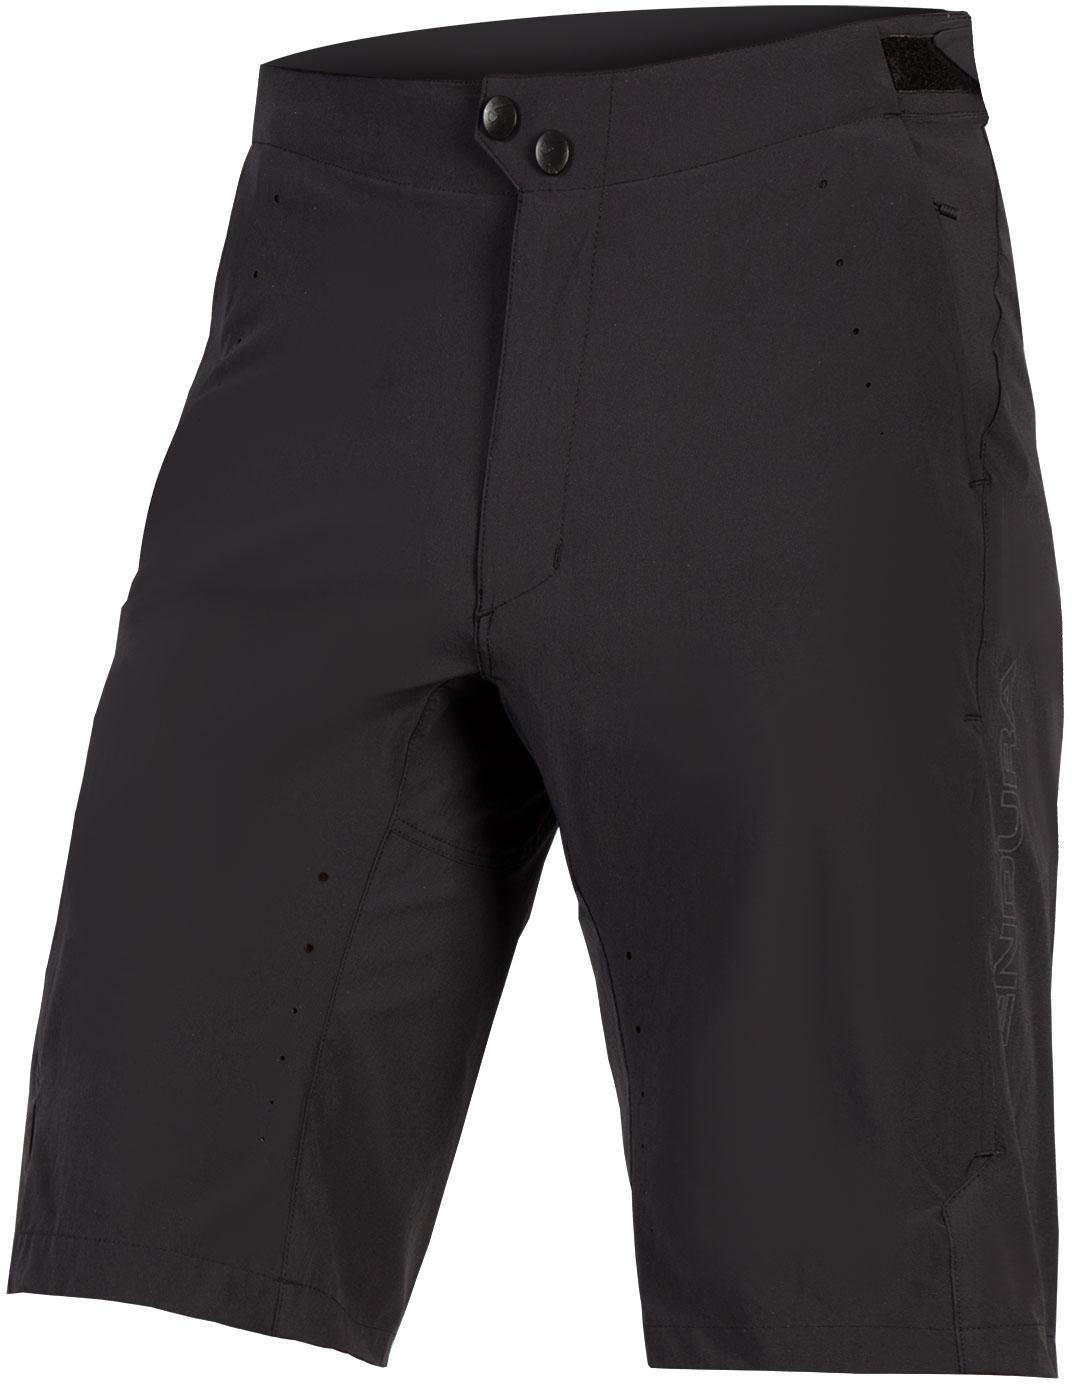 Endura Gv500 Foyle Shorts - Black